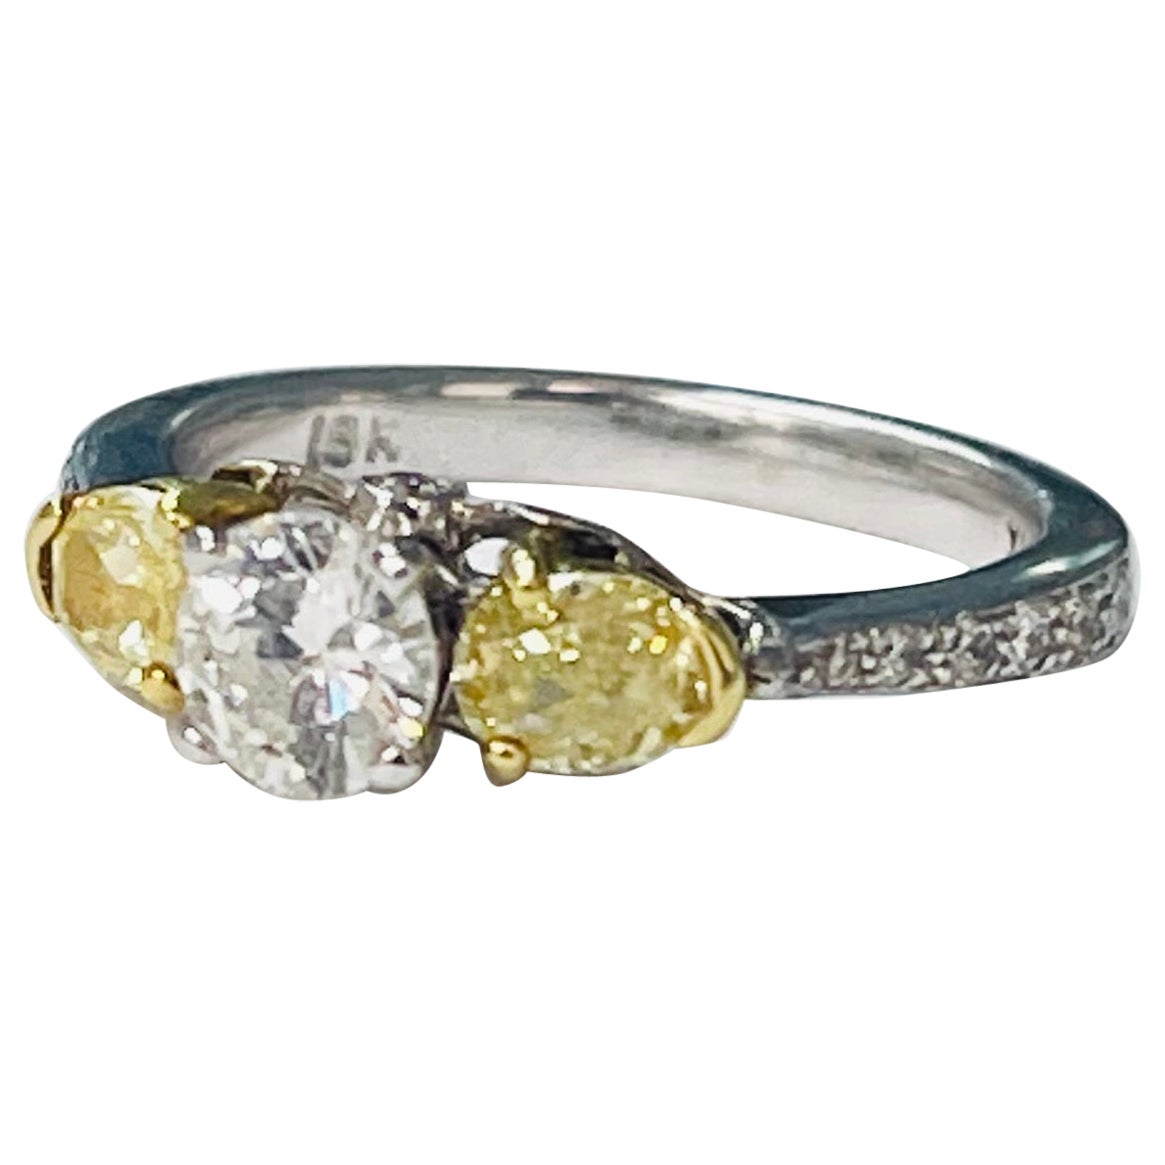 Yellow and White Diamond Three Stone Ring in 18k Gold